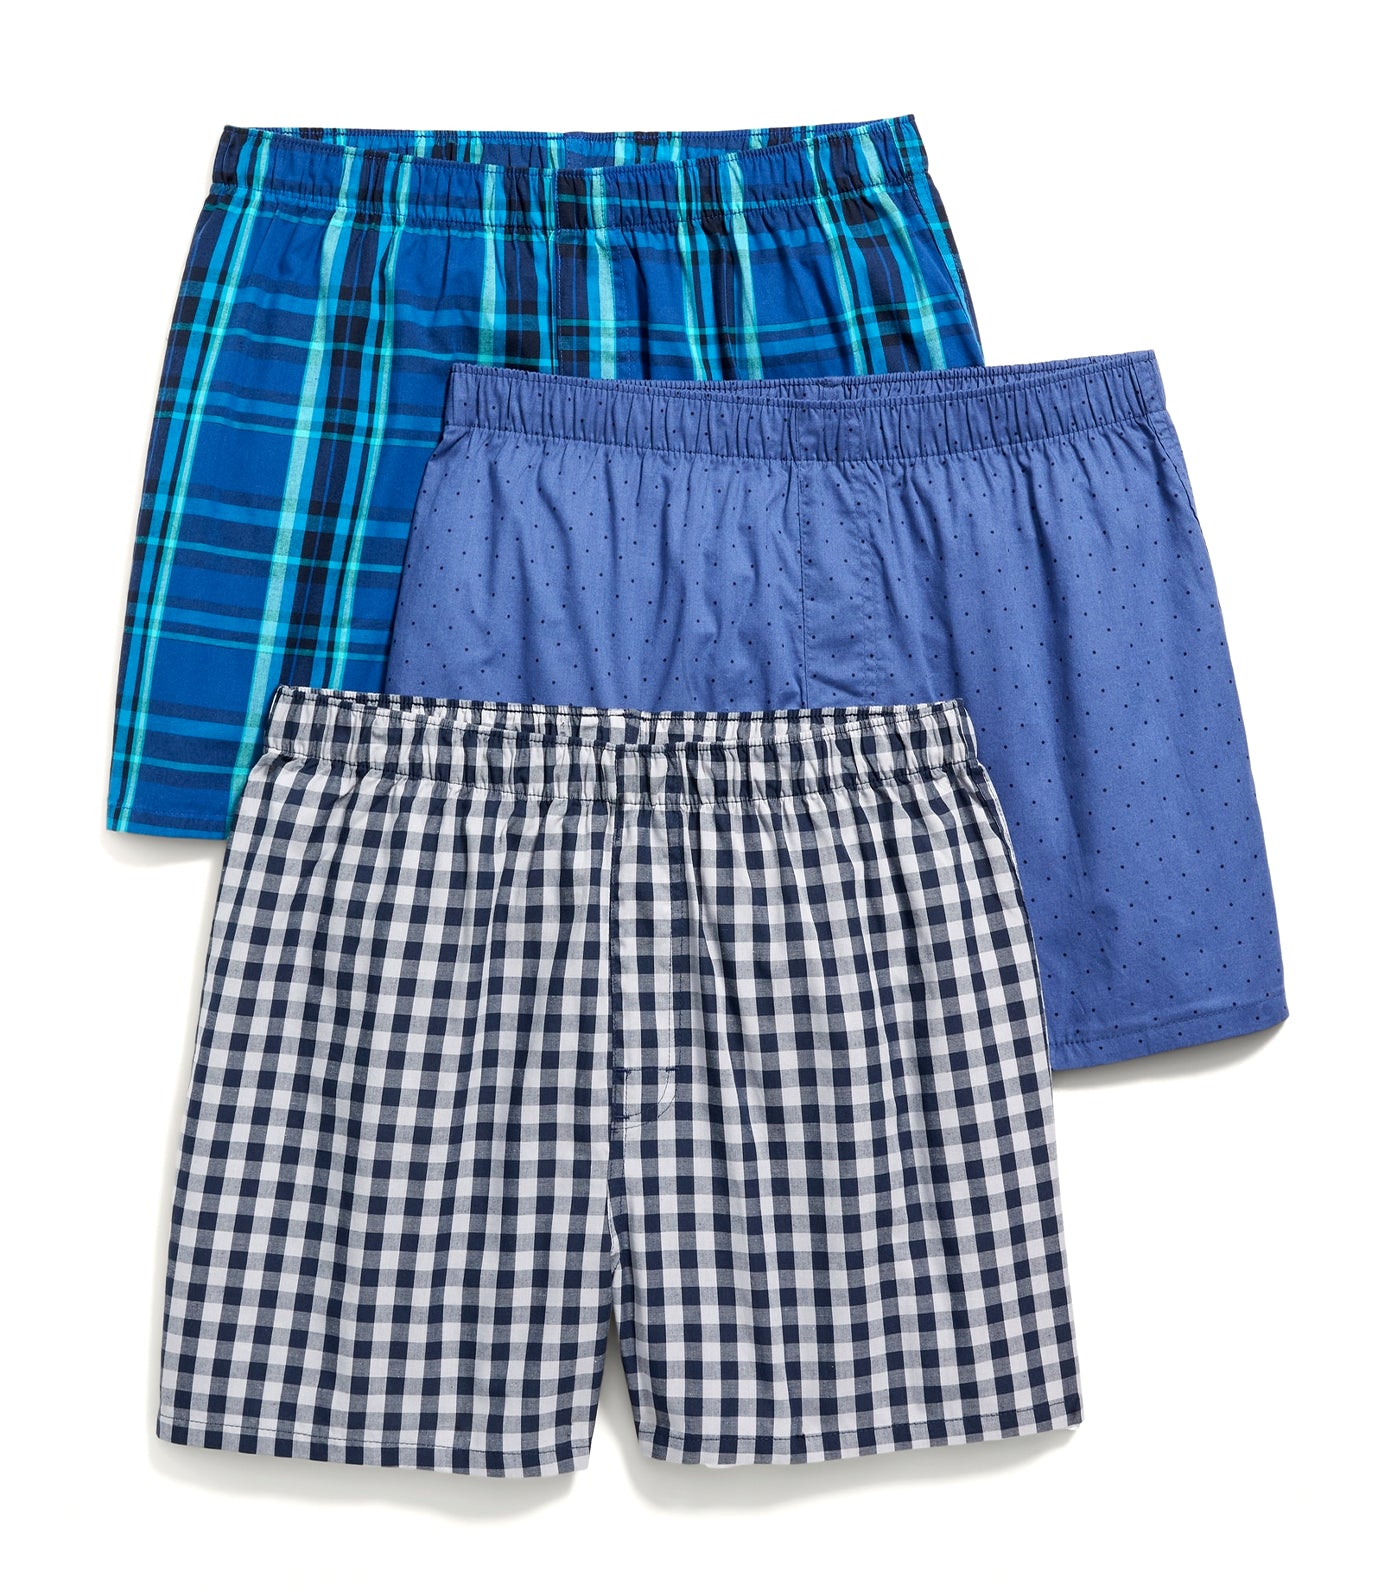 Soft-Washed Boxer Shorts 3-Pack for Men Multi Dots